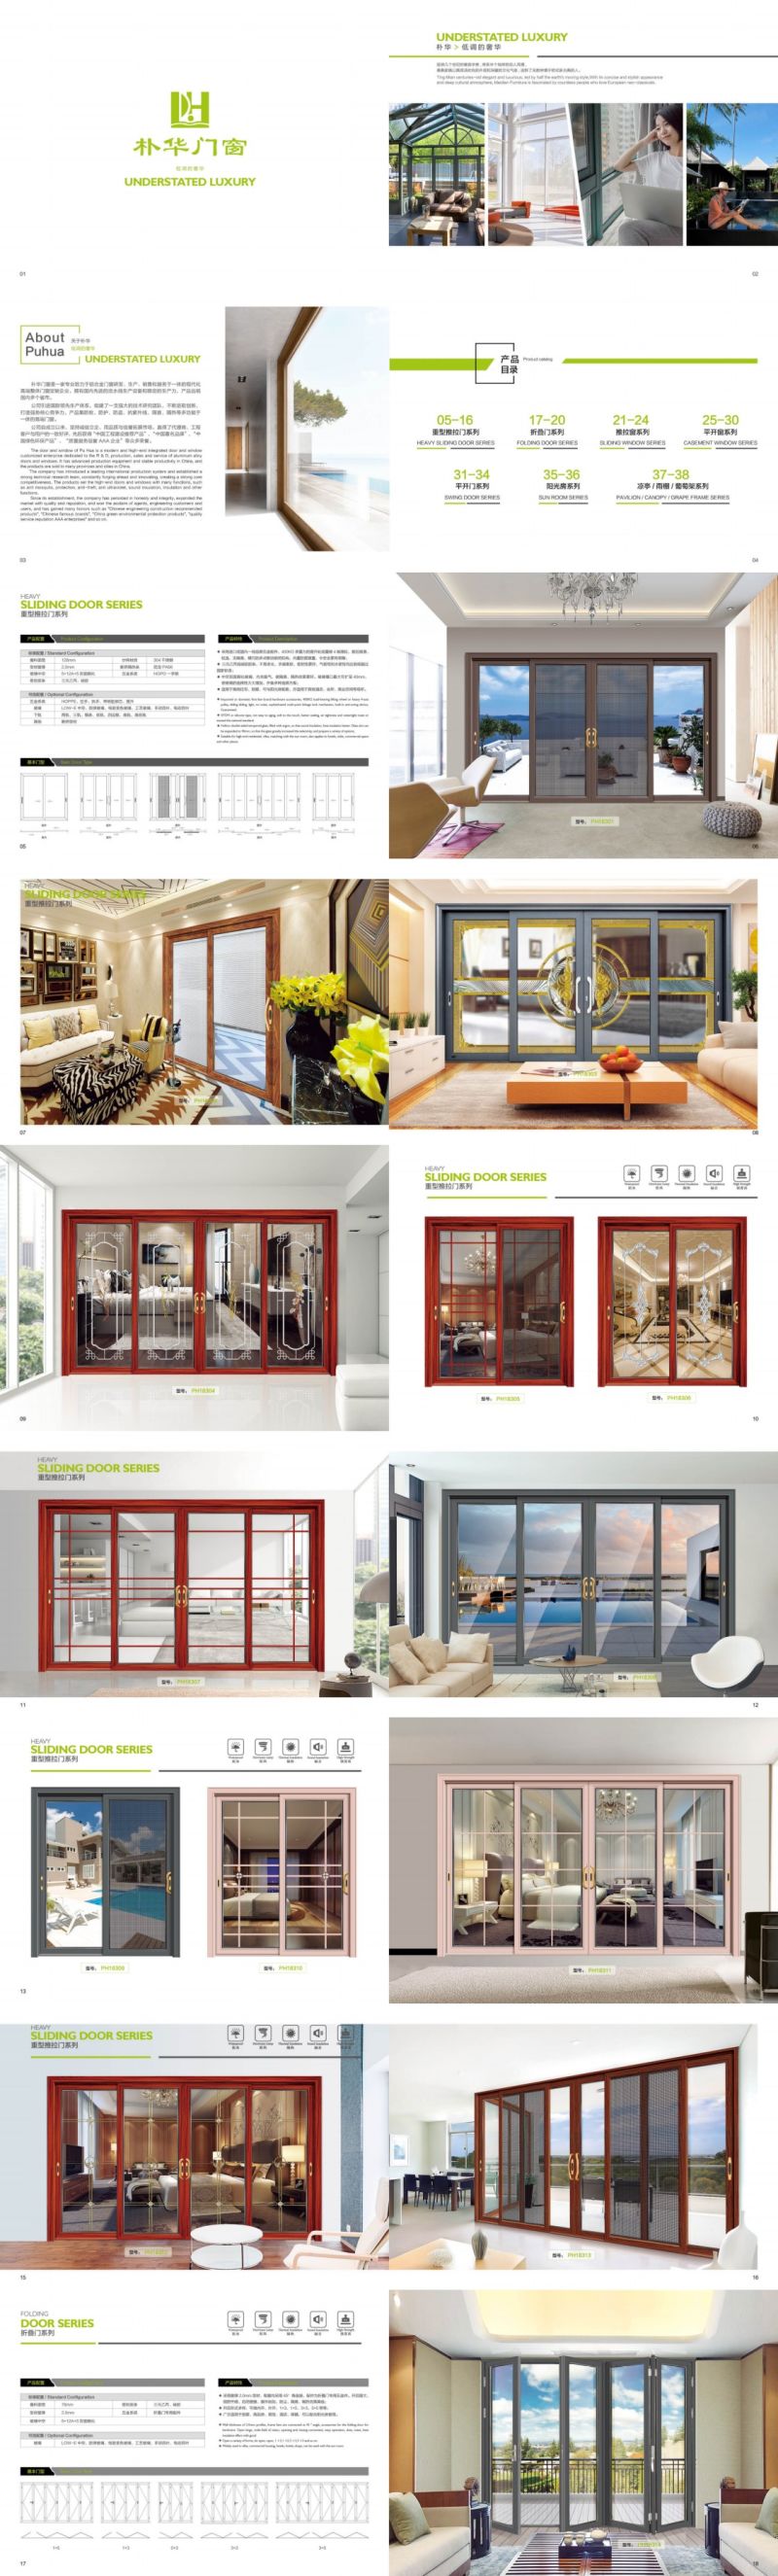 Famous Designers Design Aluminium Sliding Door for House Construction Projects